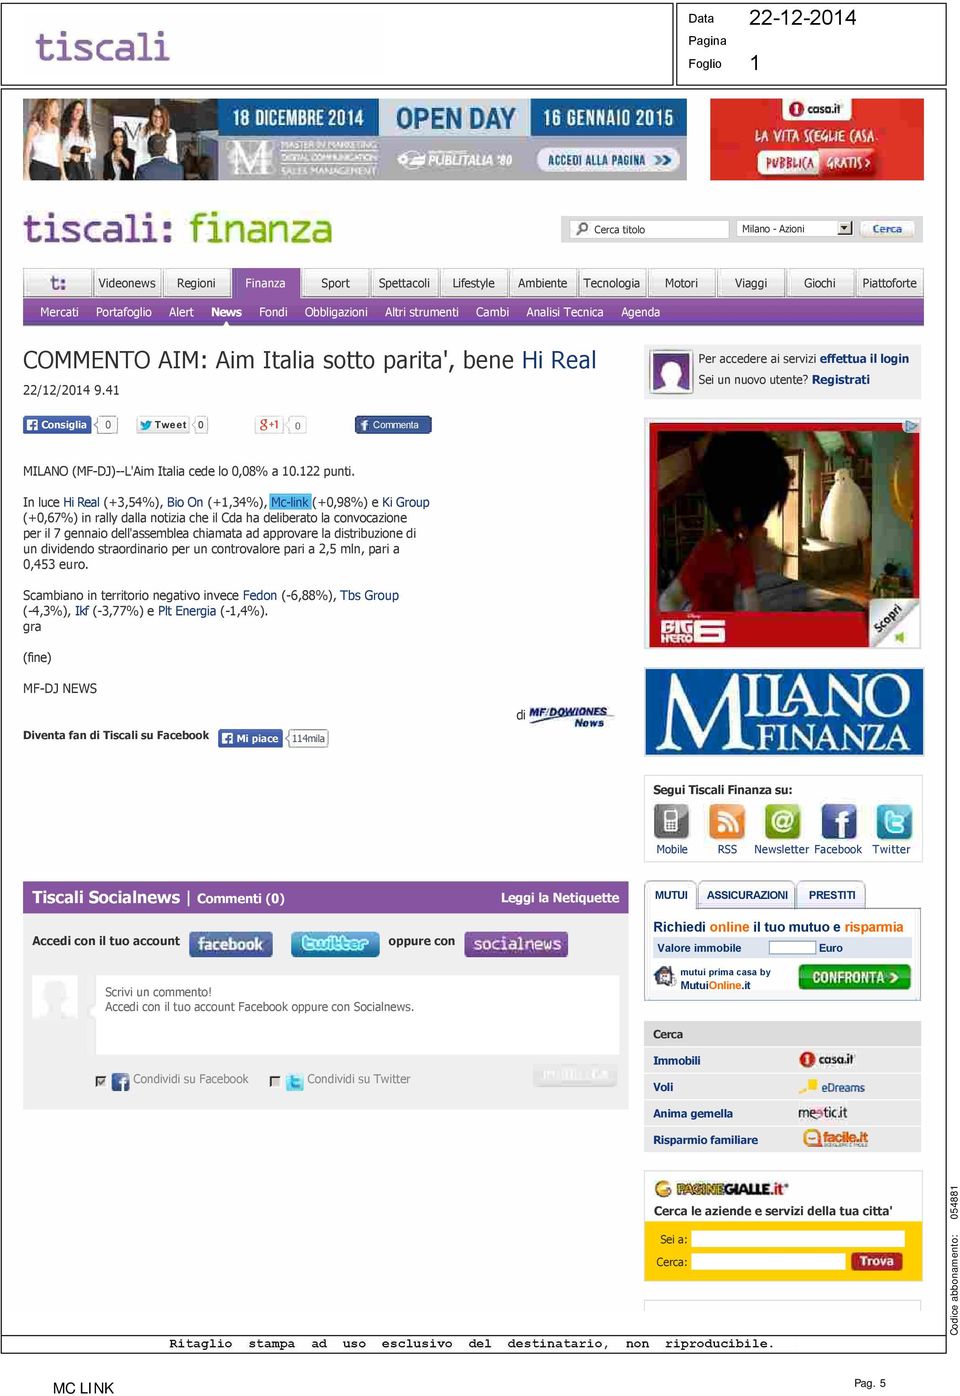 Registrati Consiglia 0 Tweet 0 0 Commenta MILANO (MF-DJ)--L'Aim Italia cede lo 0,08% a 0.22 punti.